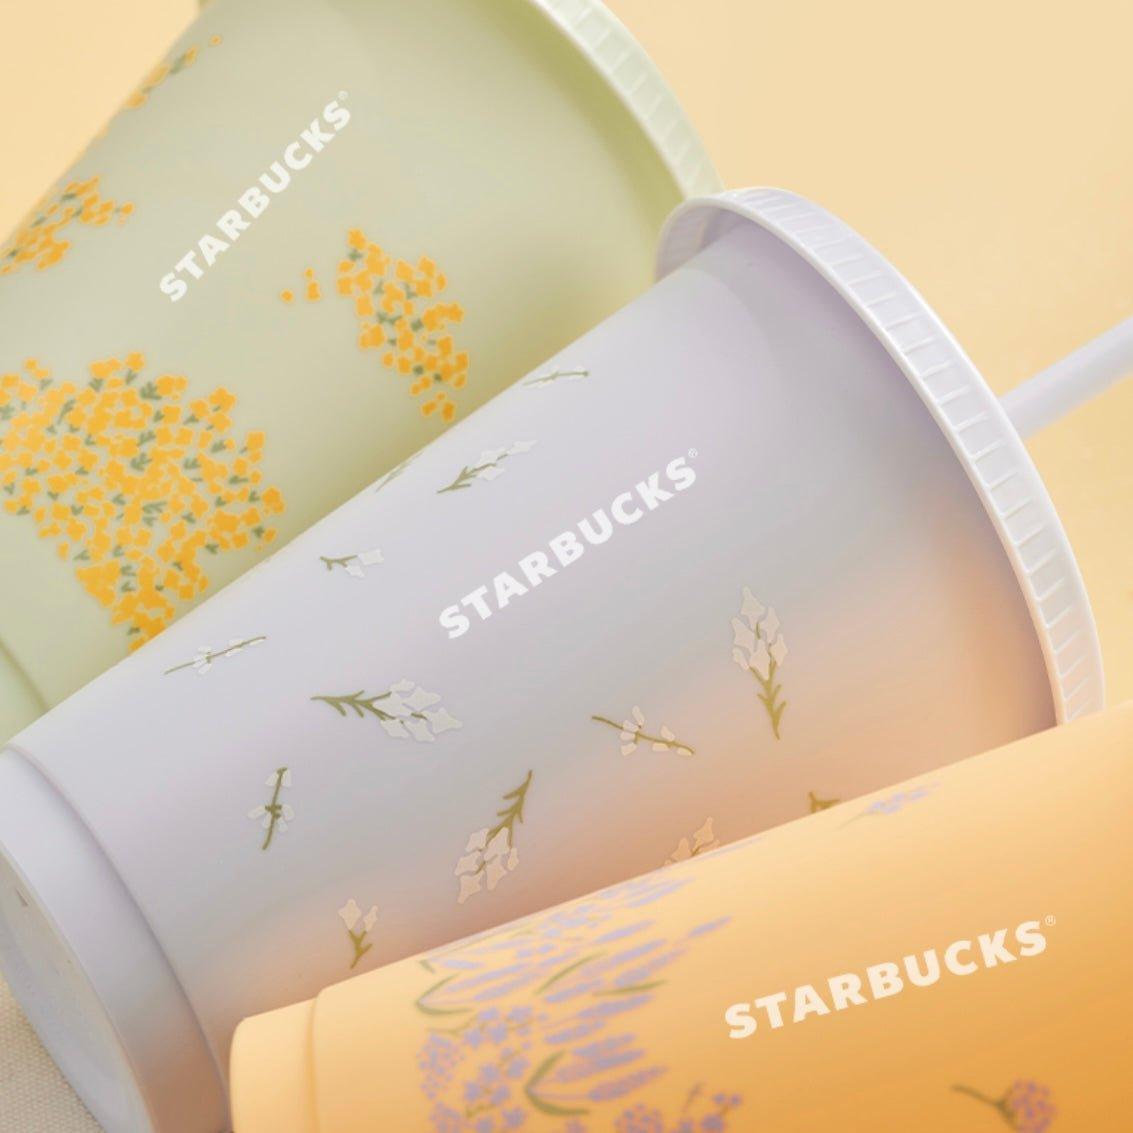 Starbucks 591ml/20oz Set of 3 Plastic Cups (with drawstring bag) - Ann Ann Starbucks